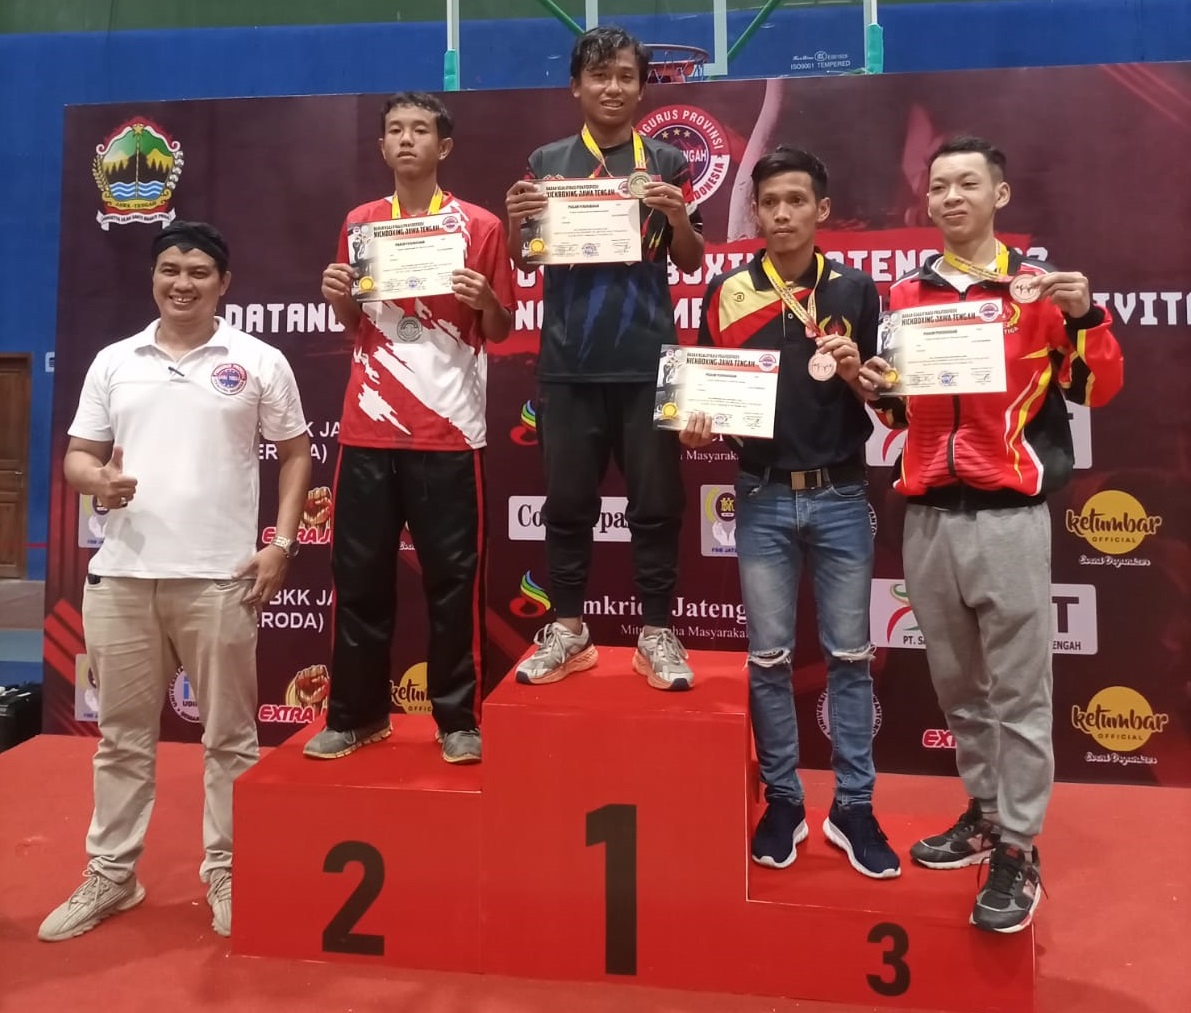 Wahyu Satrio Bimo Raih Juara 1  Kick Boxing Jateng